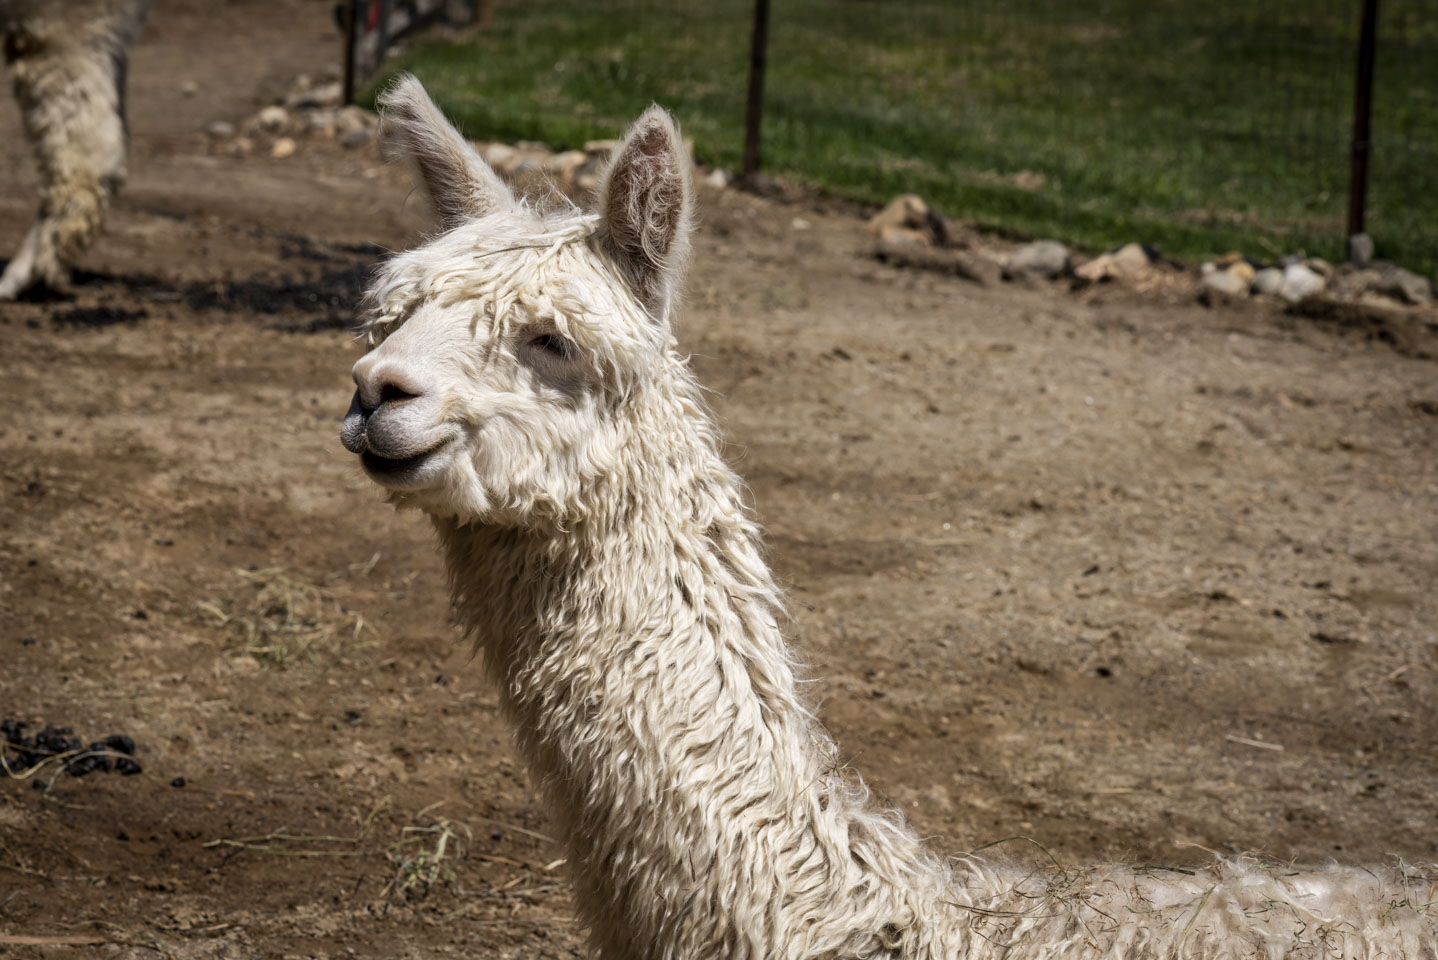 A cream colored Suri alpaca